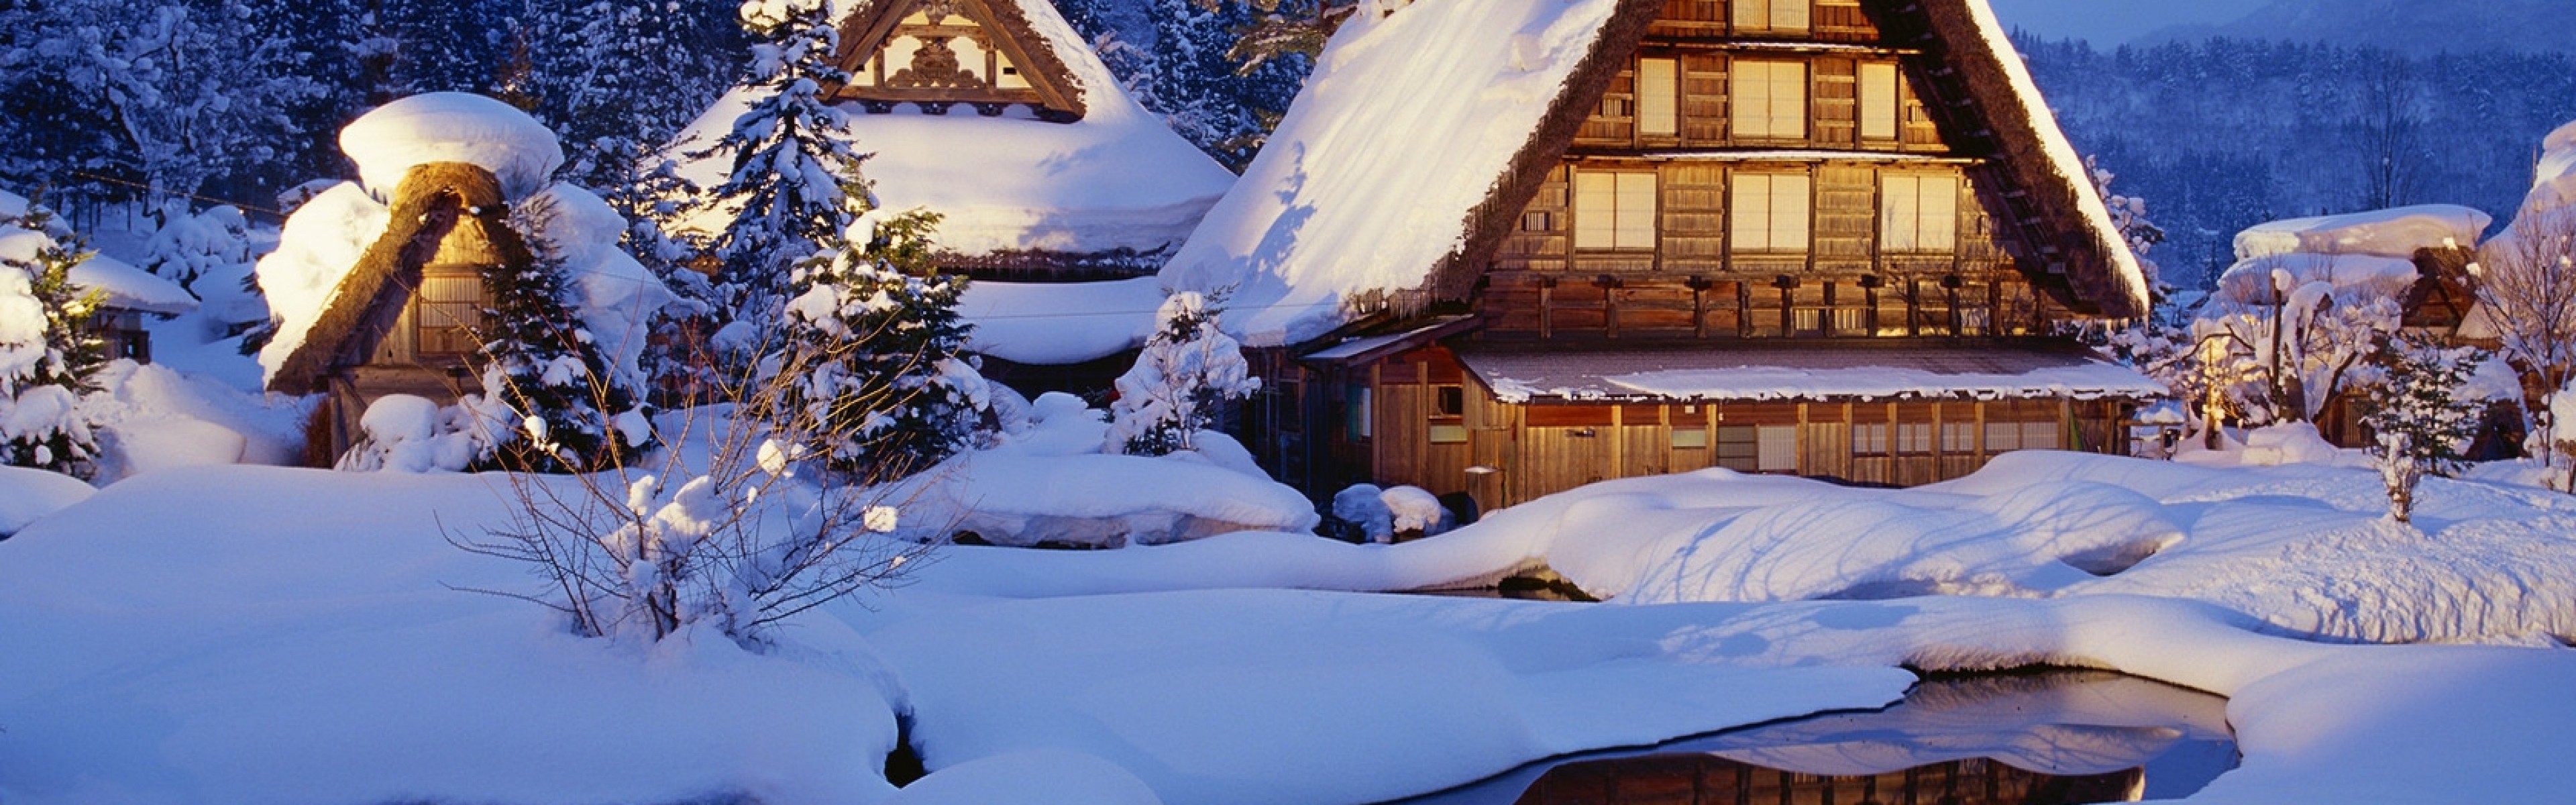 Wallpaper winter, snow, lodges, lake, light, reflection, japan